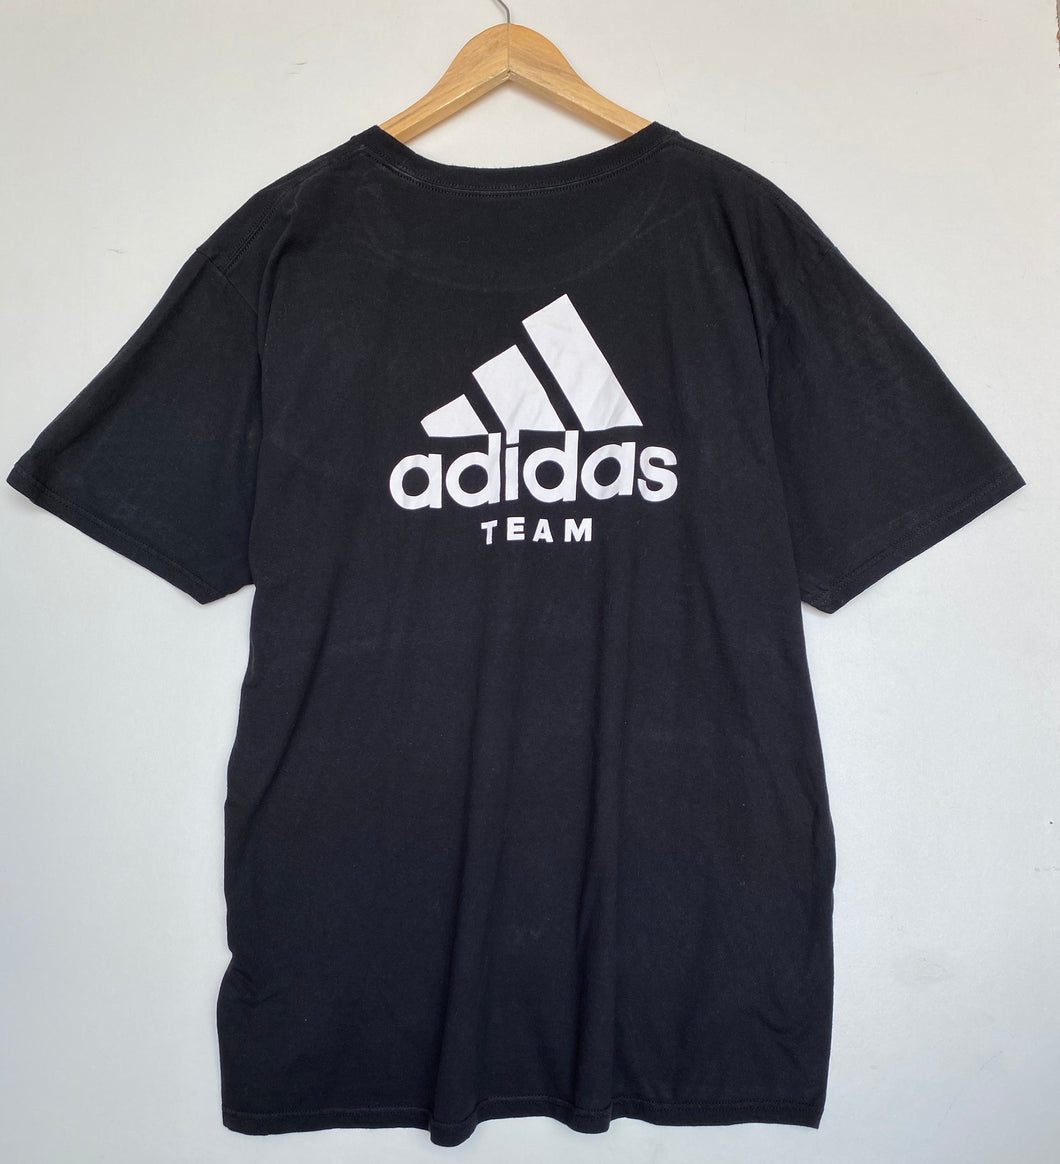 Adidas t-shirt (XL)